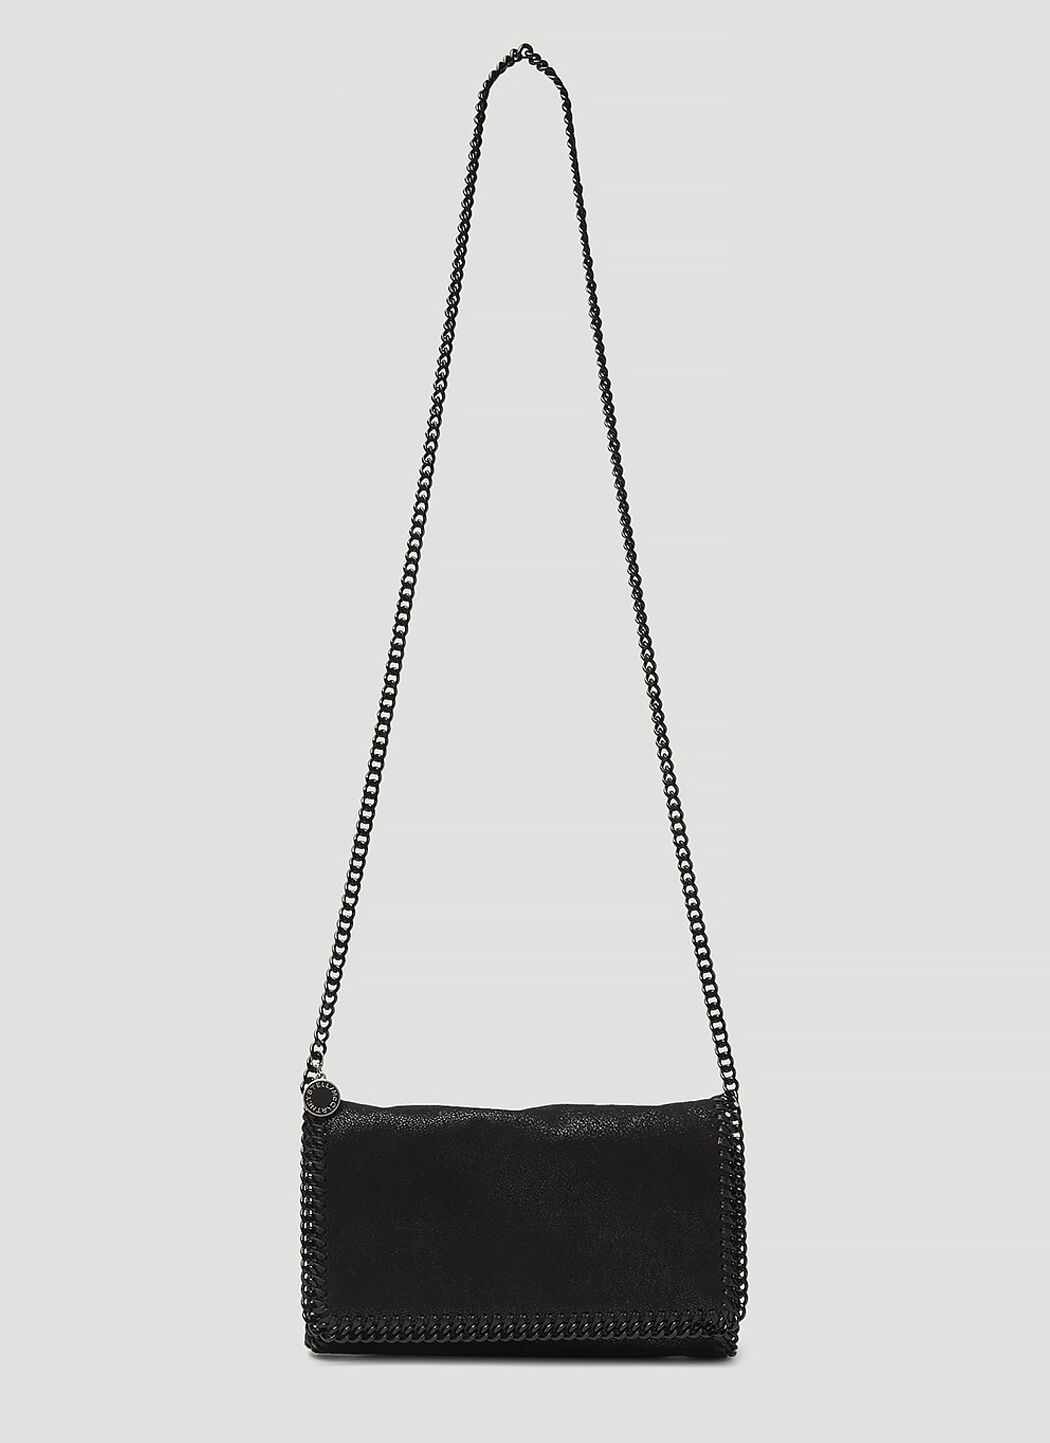 LaBante - Cross Body Bag - Courtney - Black Handbag for Women Clutch Bag  Small Bag | Clutch Bags for Women Over Shoulder Bags For Women PU Vegan  Leather : Amazon.in: Fashion